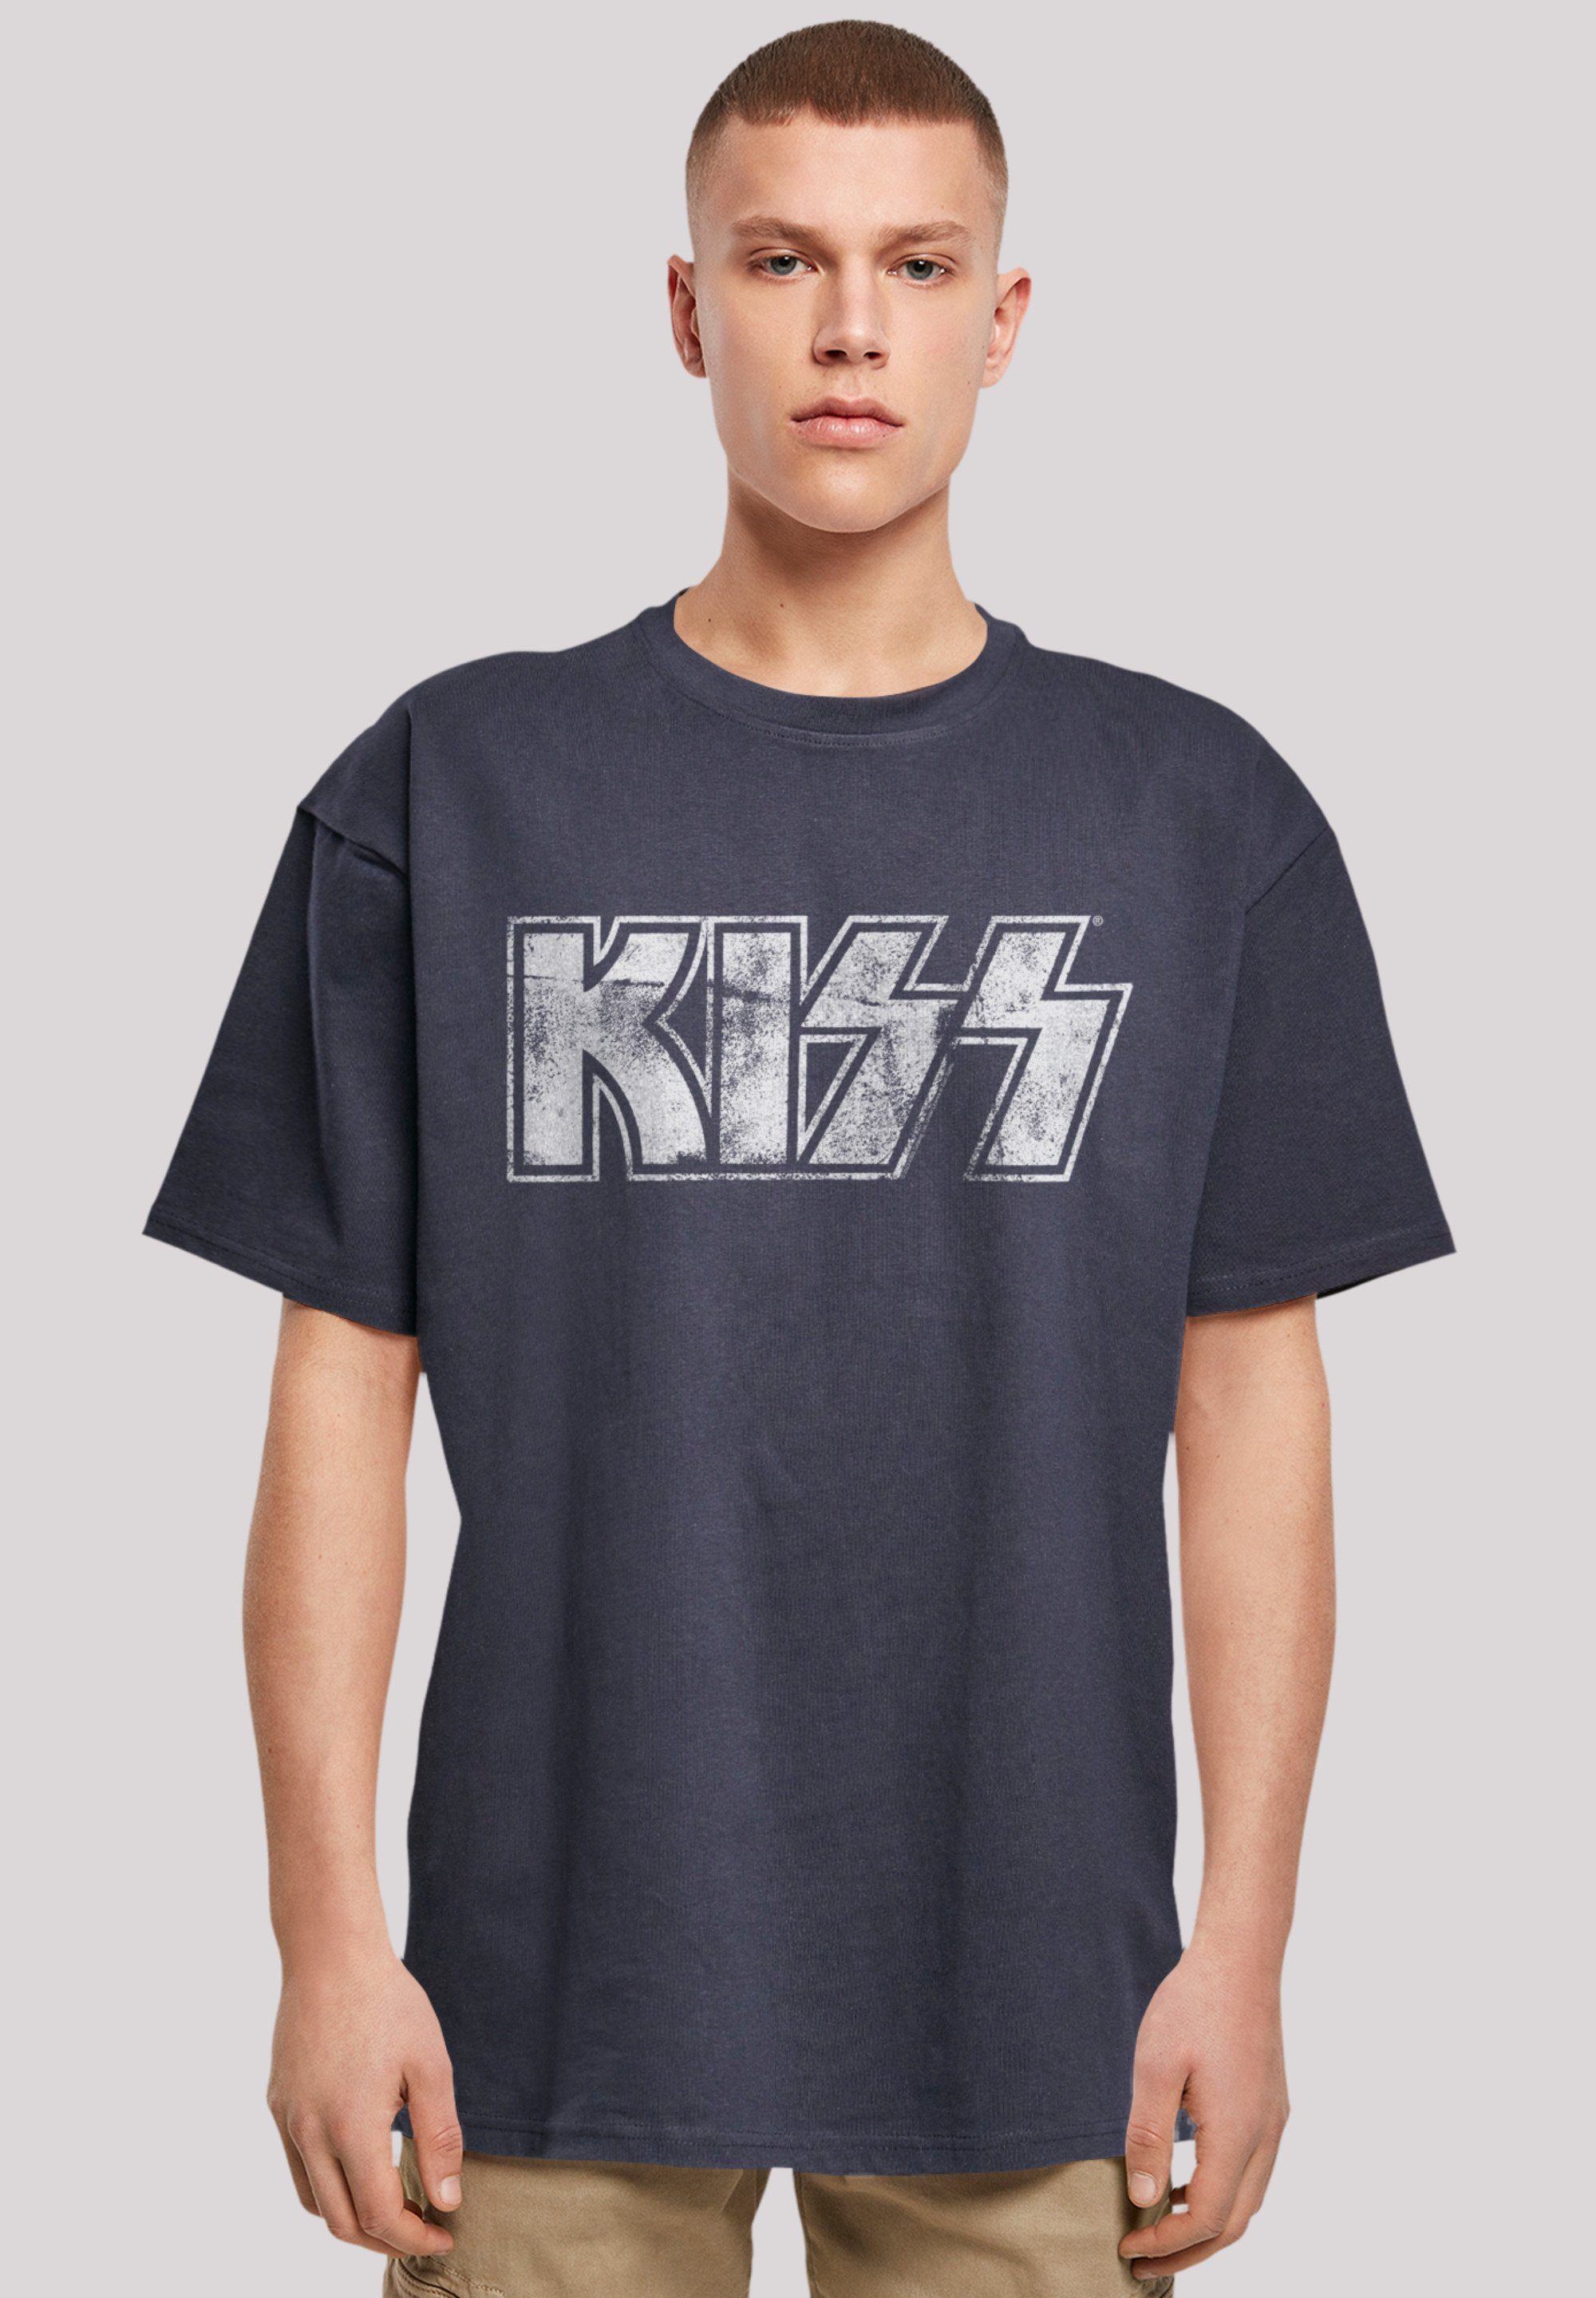 Off Logo Rock Musik, F4NT4STIC Rock Band Premium Vintage By navy Qualität, T-Shirt Kiss